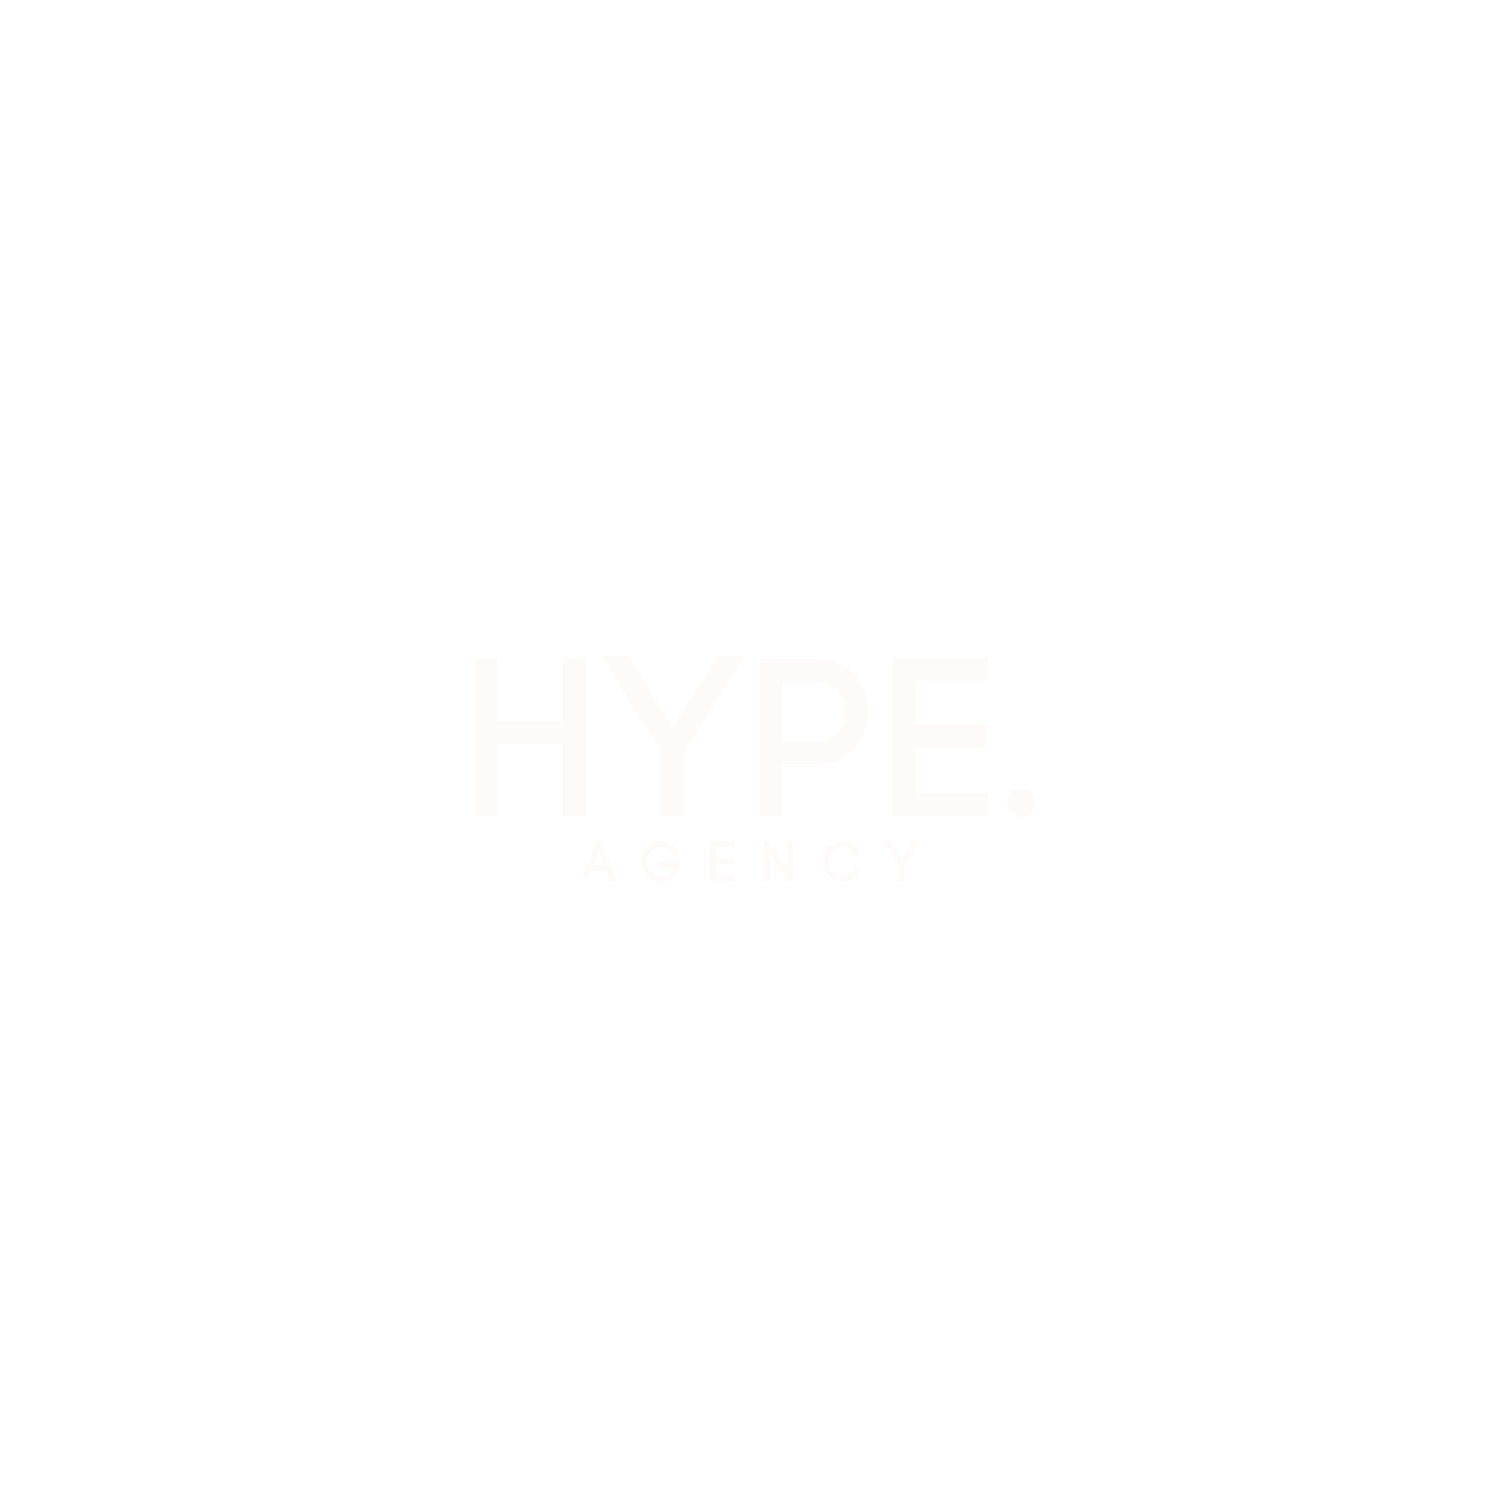 #1 Marketing Agency | HYPE Agency